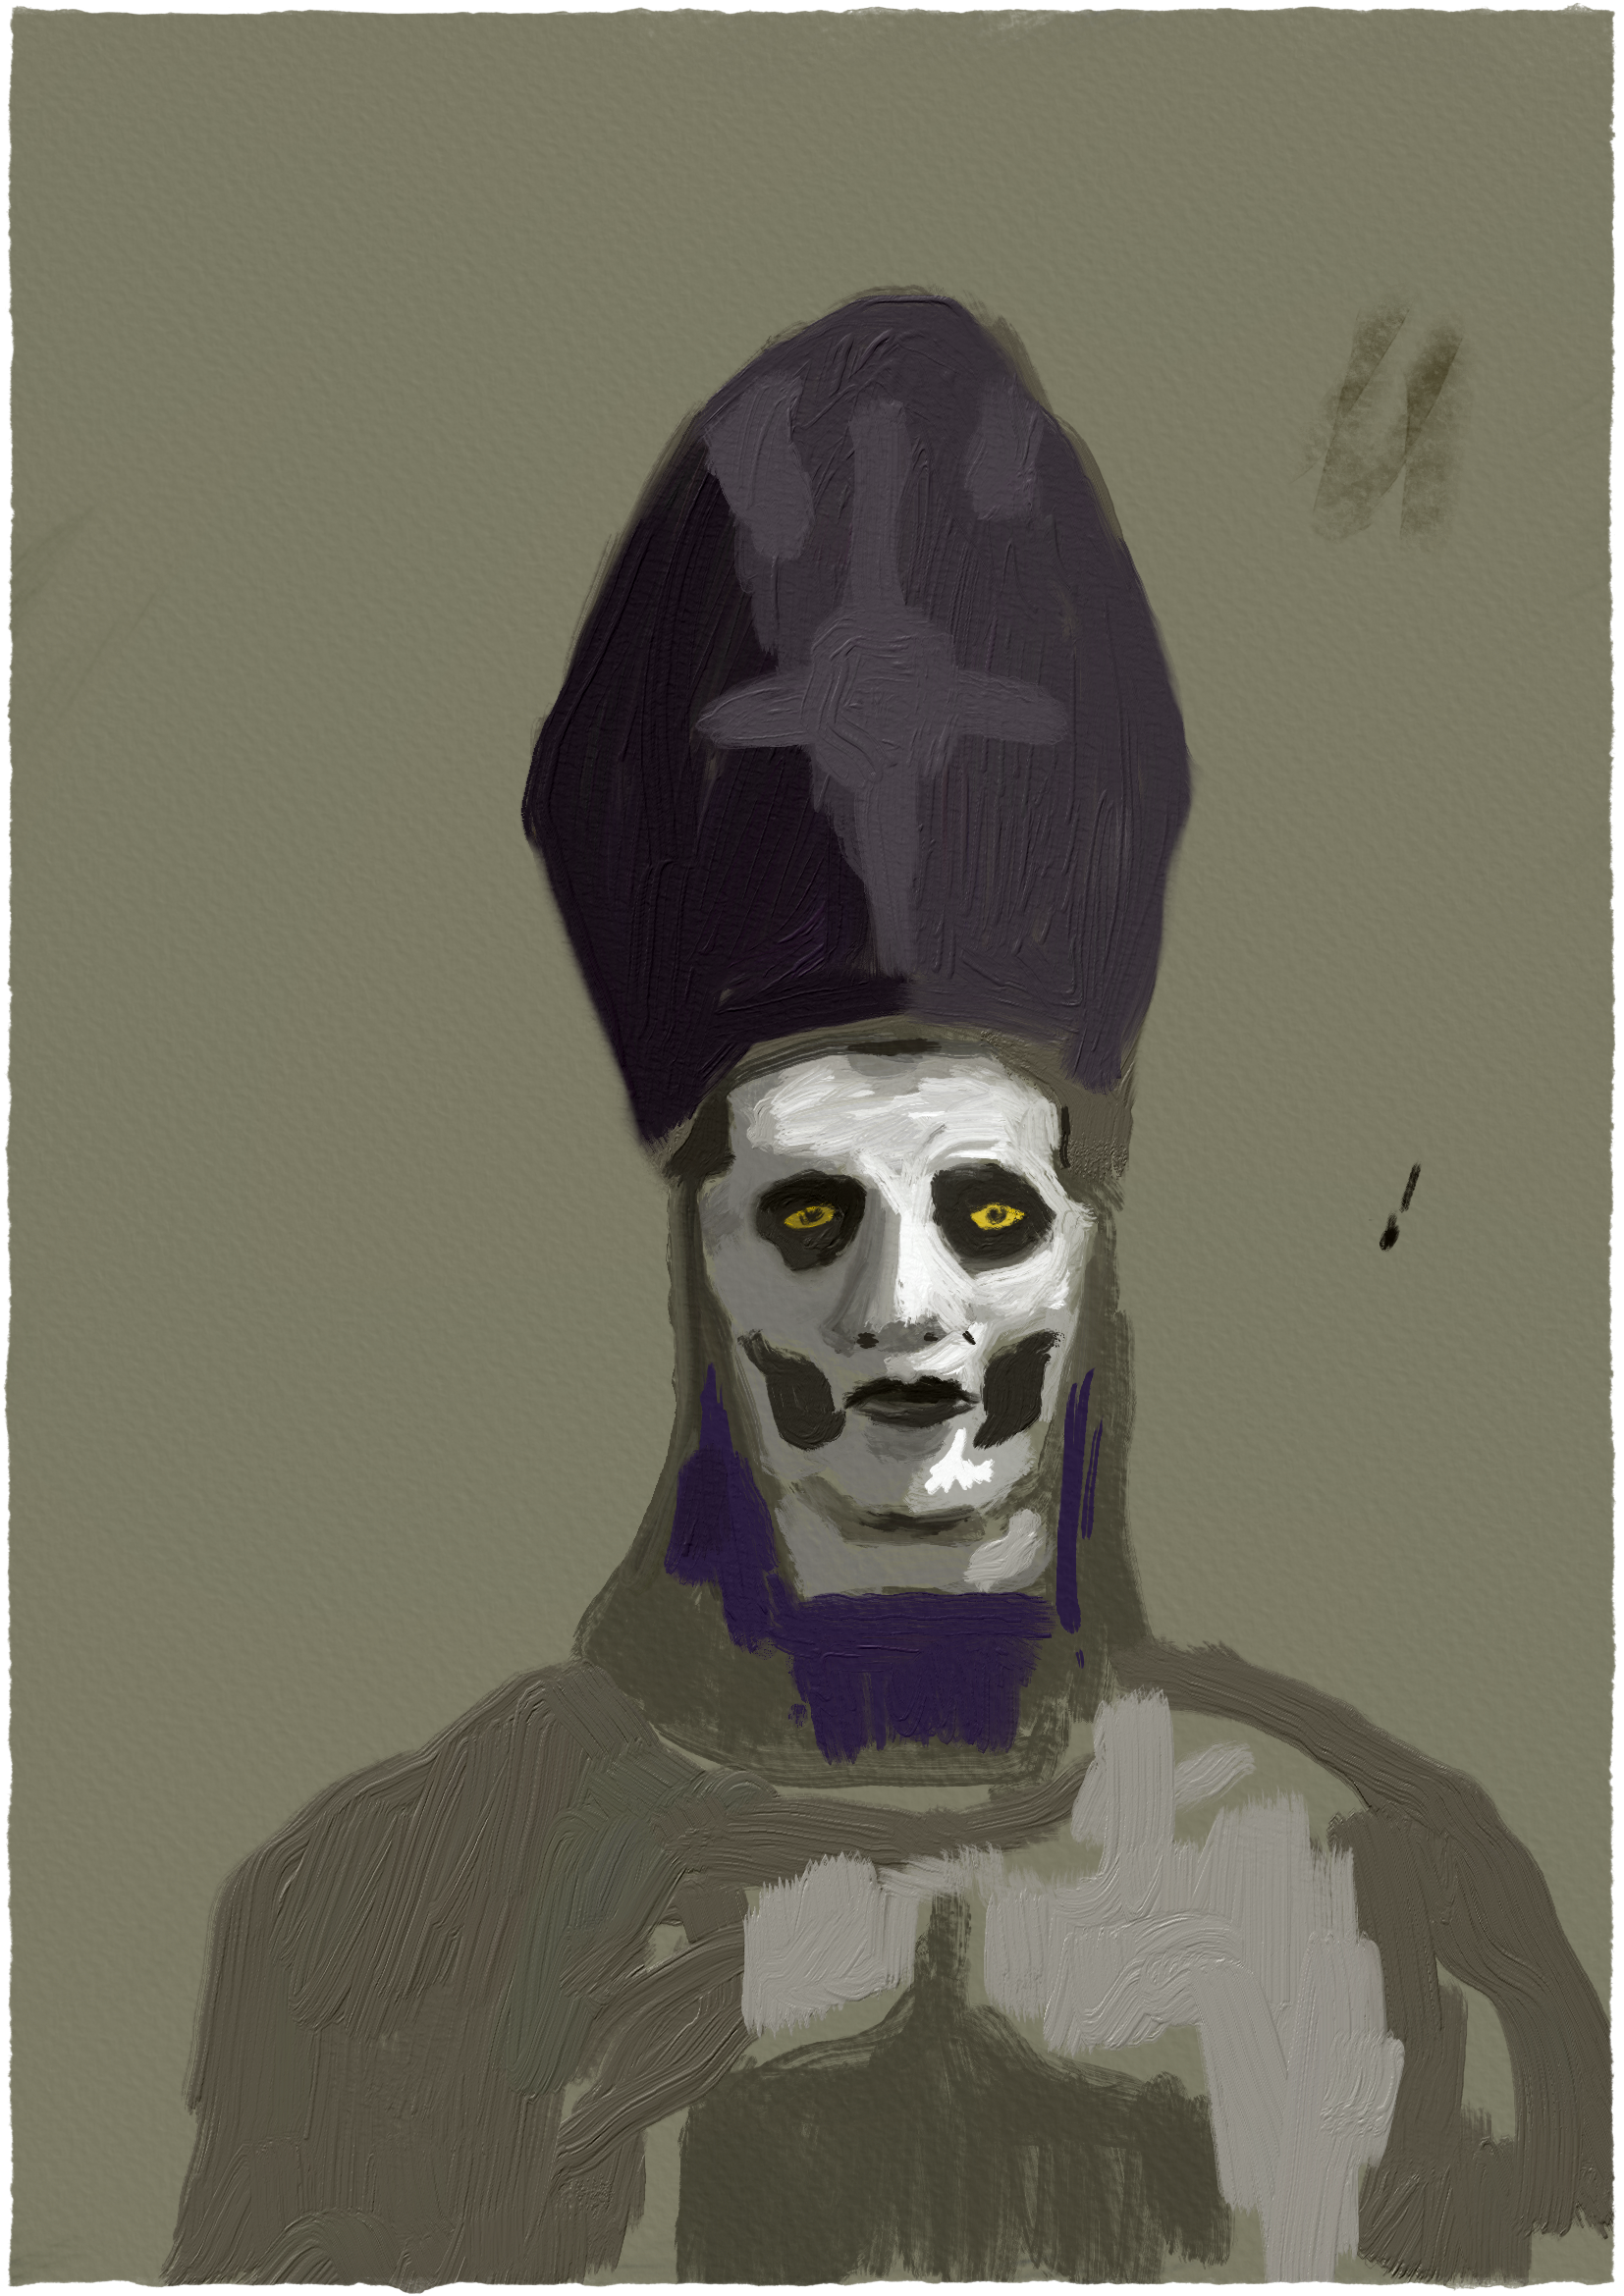 A portrait of Ghost's Papa Emeritus